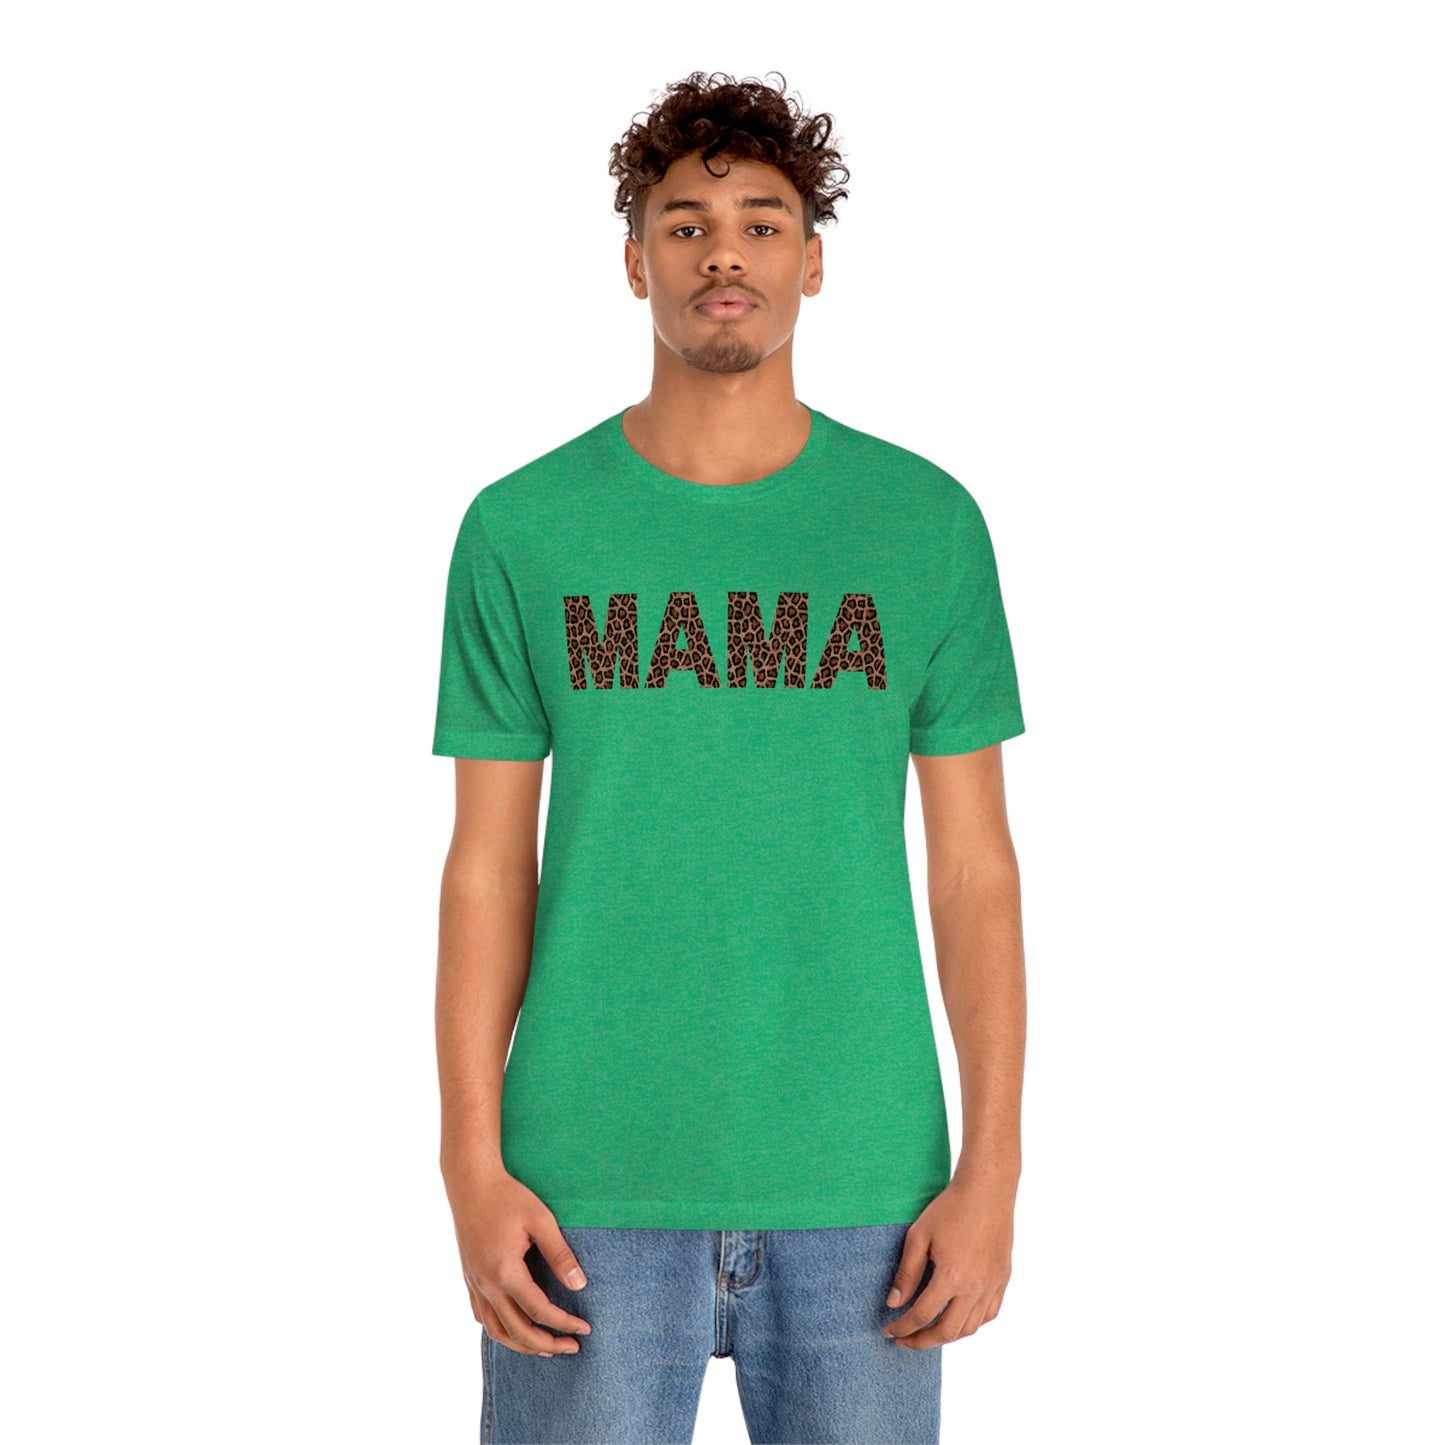 Leopard print shirt Leopard print Mama shirt cute mama shirt - mama tshirt Mom gift